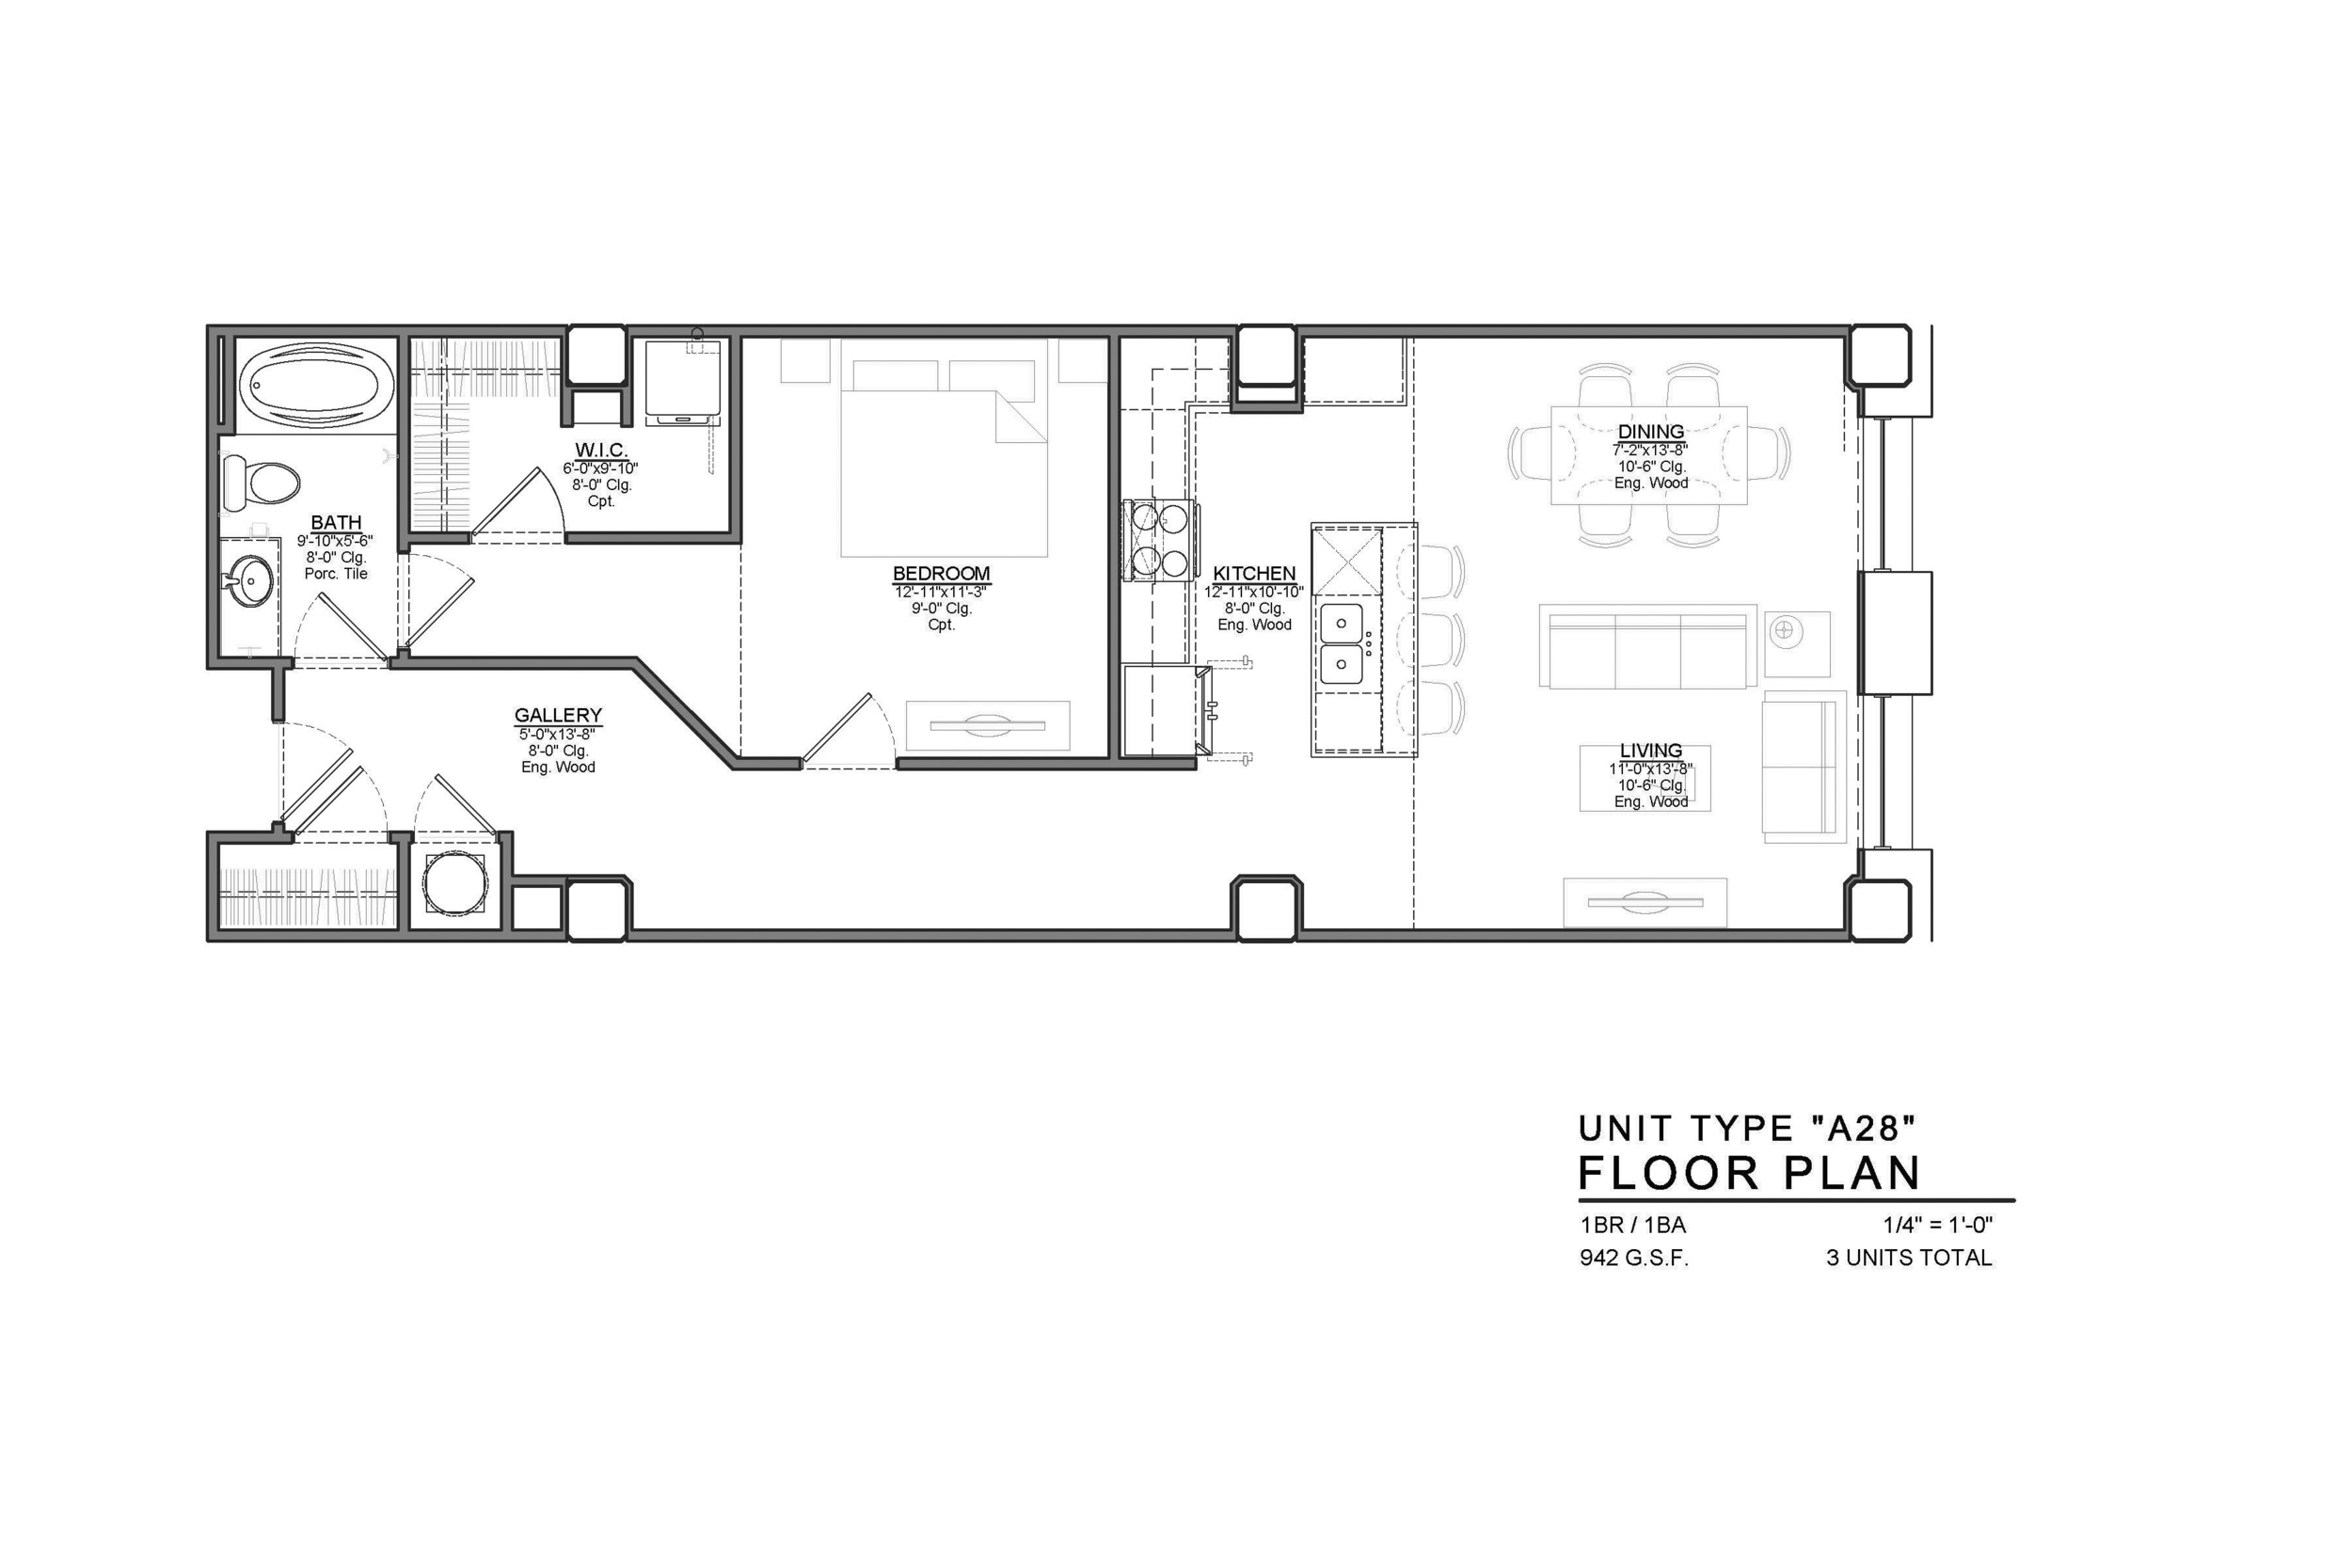 A28 FLOOR PLAN: 1 BEDROOM / 1 BATH